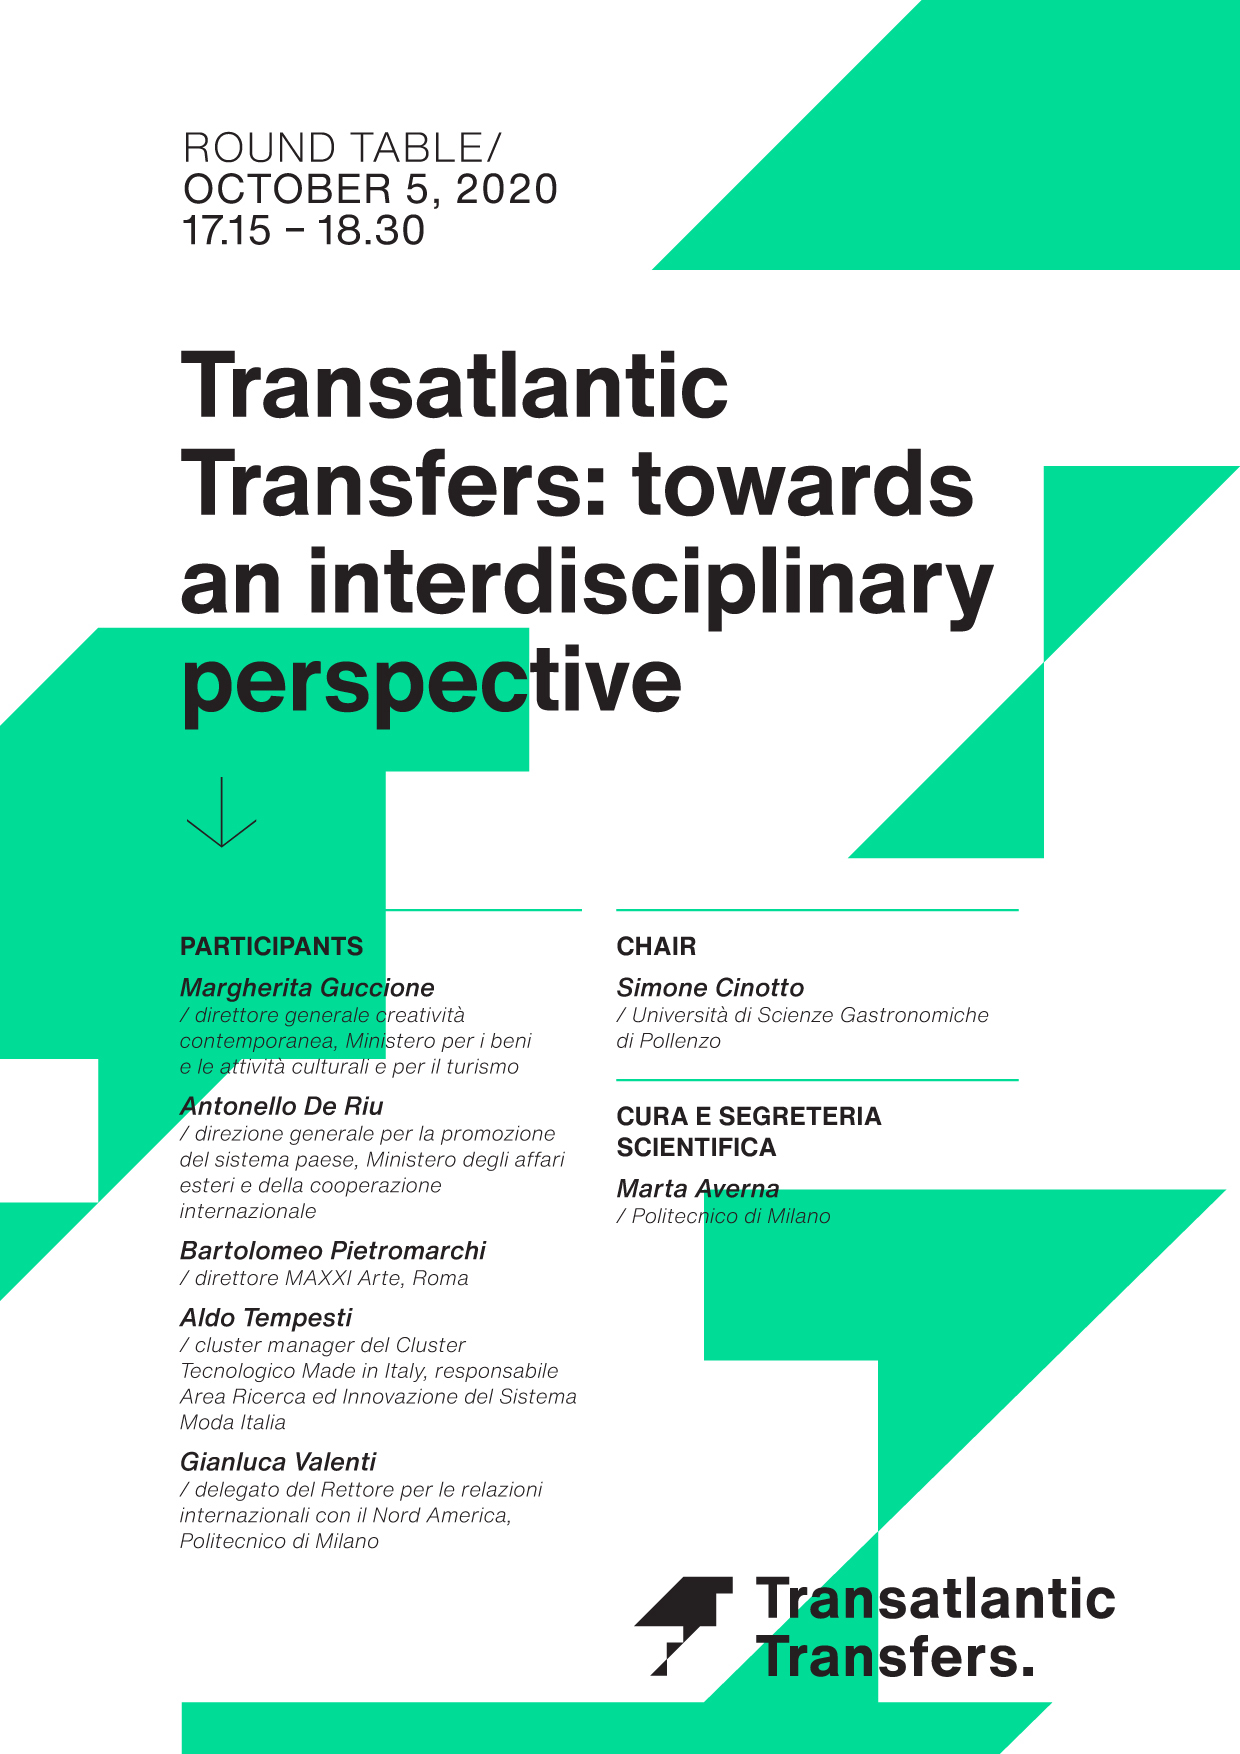 Transatlantic Transfers: towards an interdisciplinary perspective